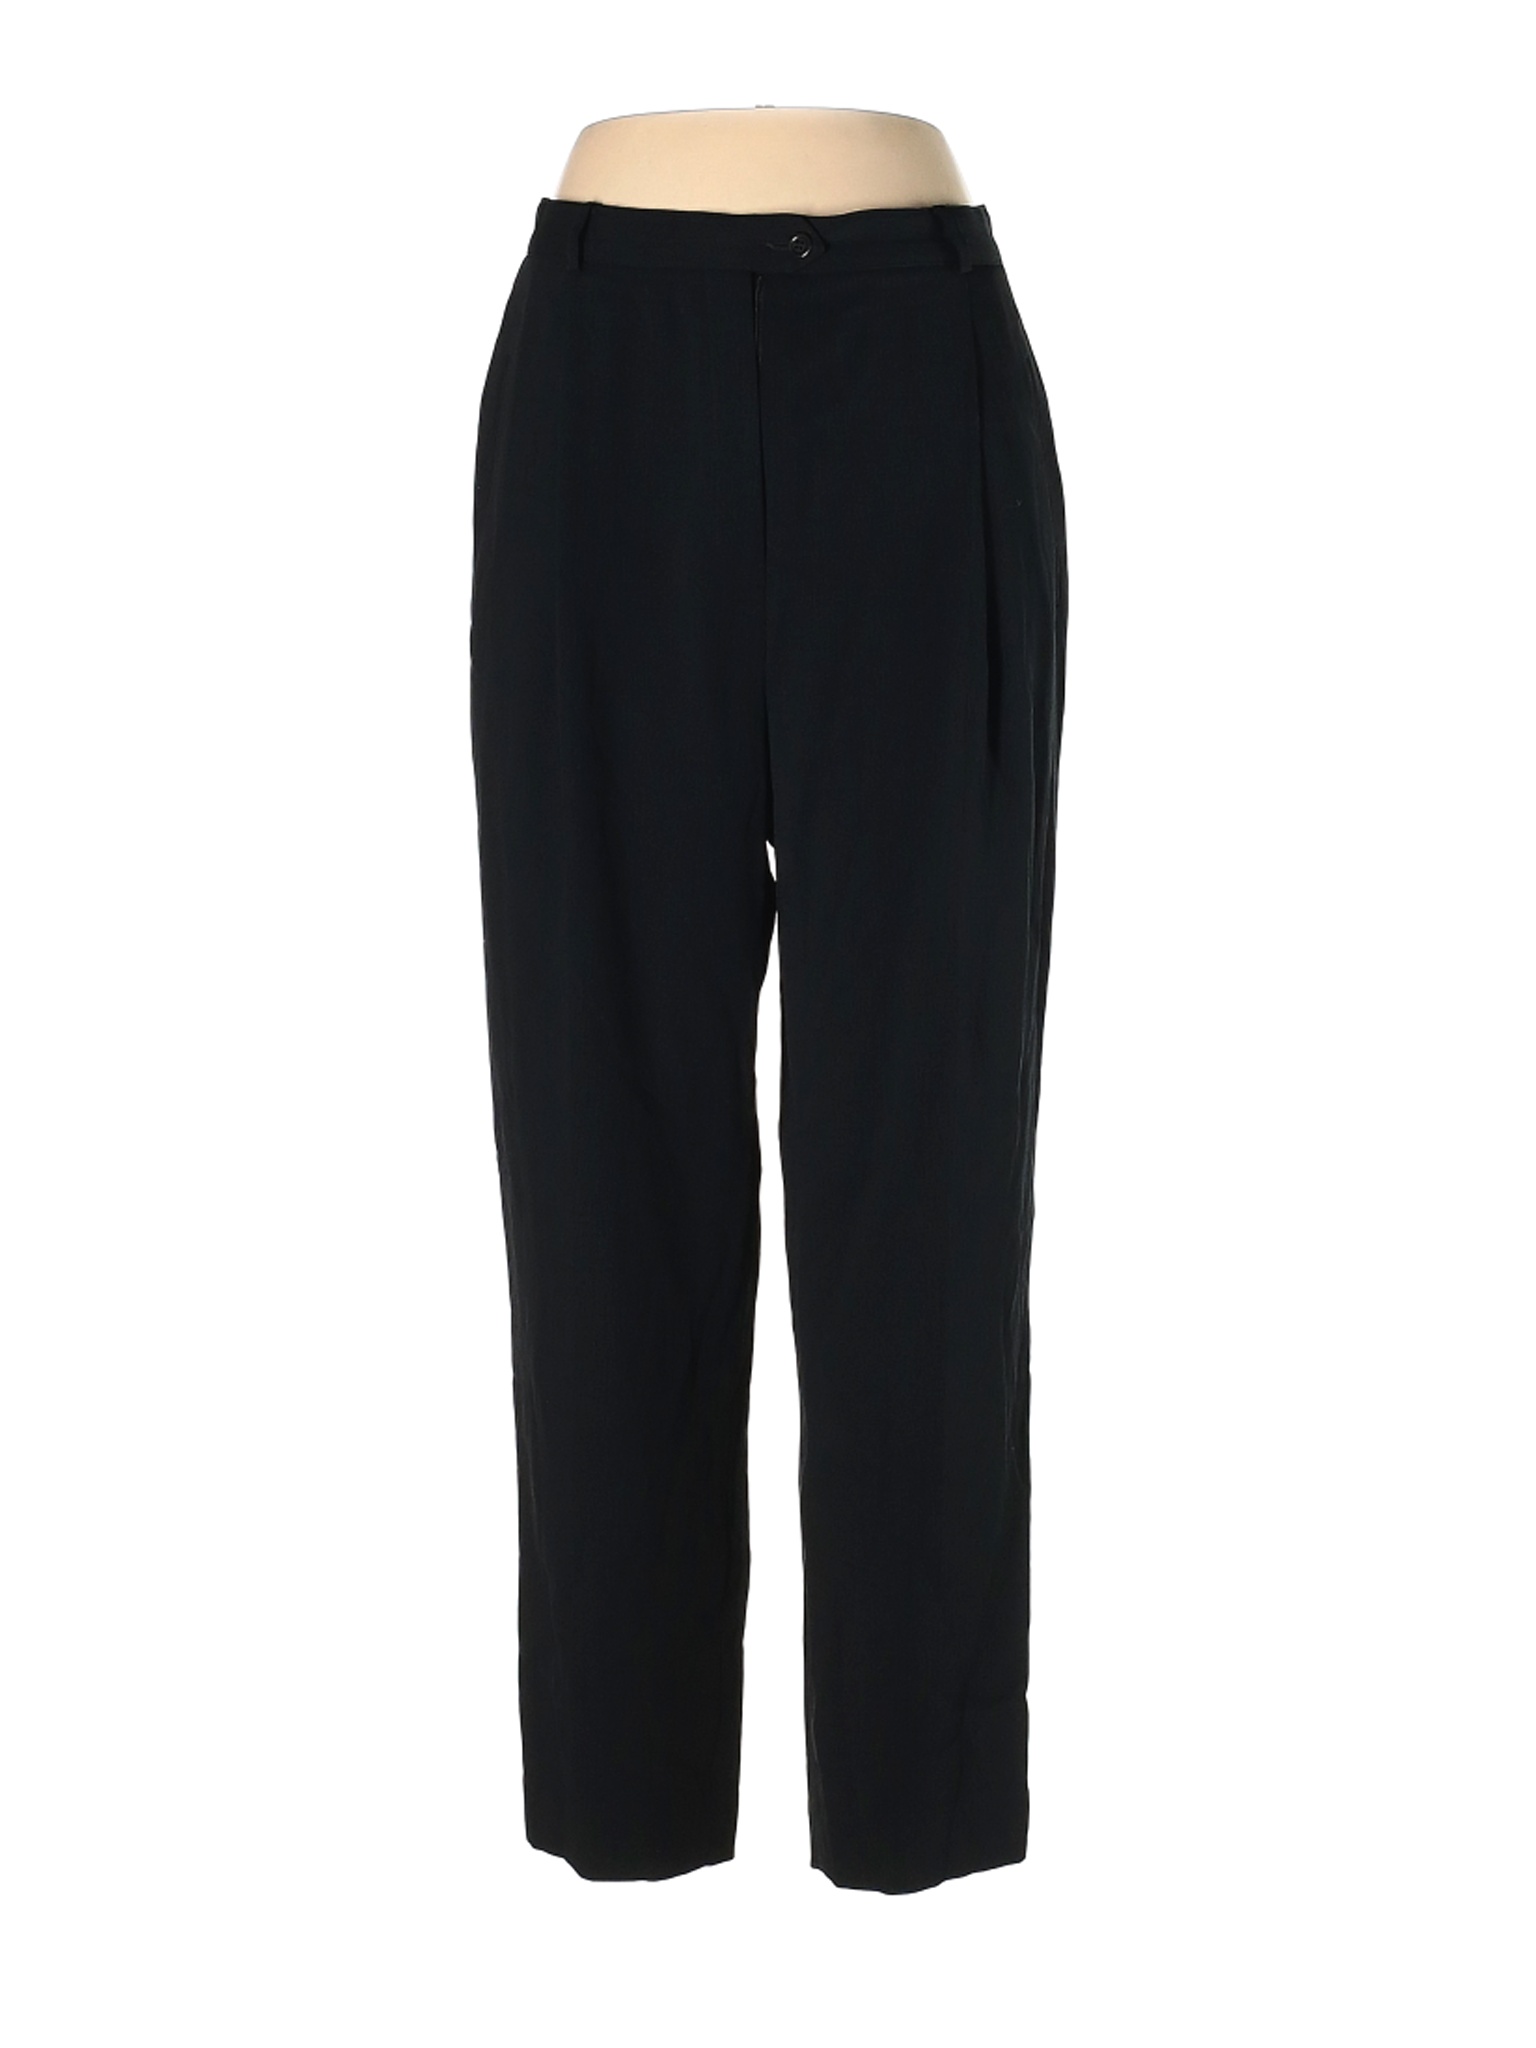 Garfield & Marks Women Black Dress Pants 12 | eBay